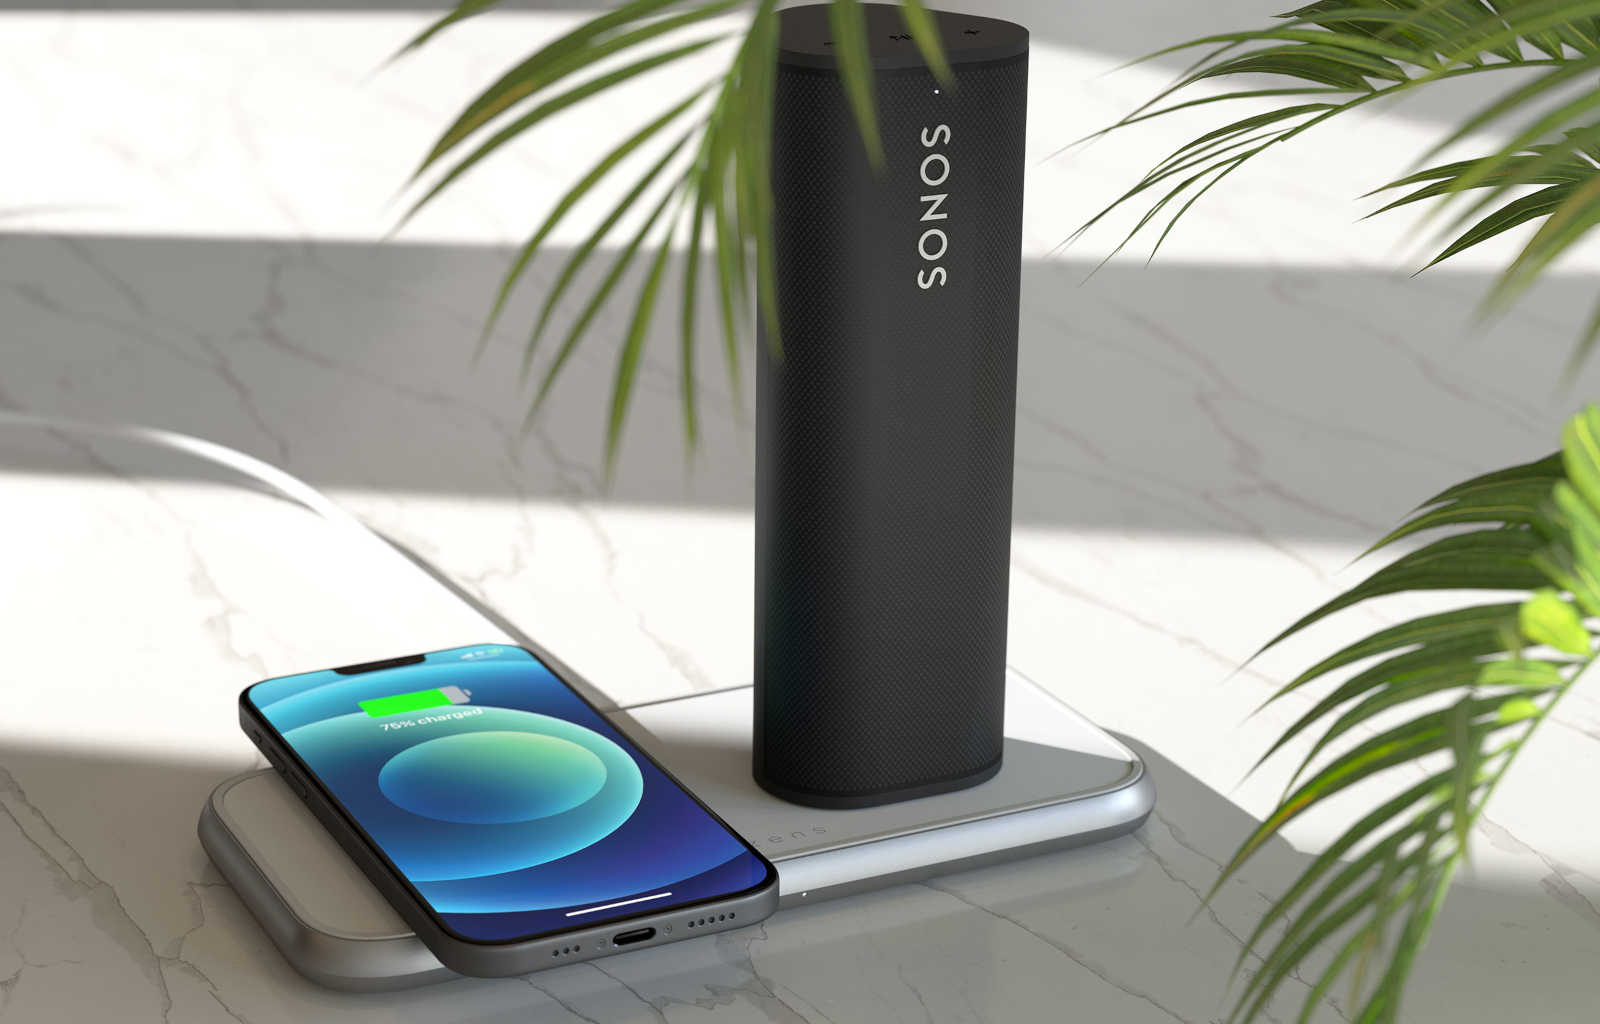 Aluminium dual charger charging iPhone 12 and Sonos Roam